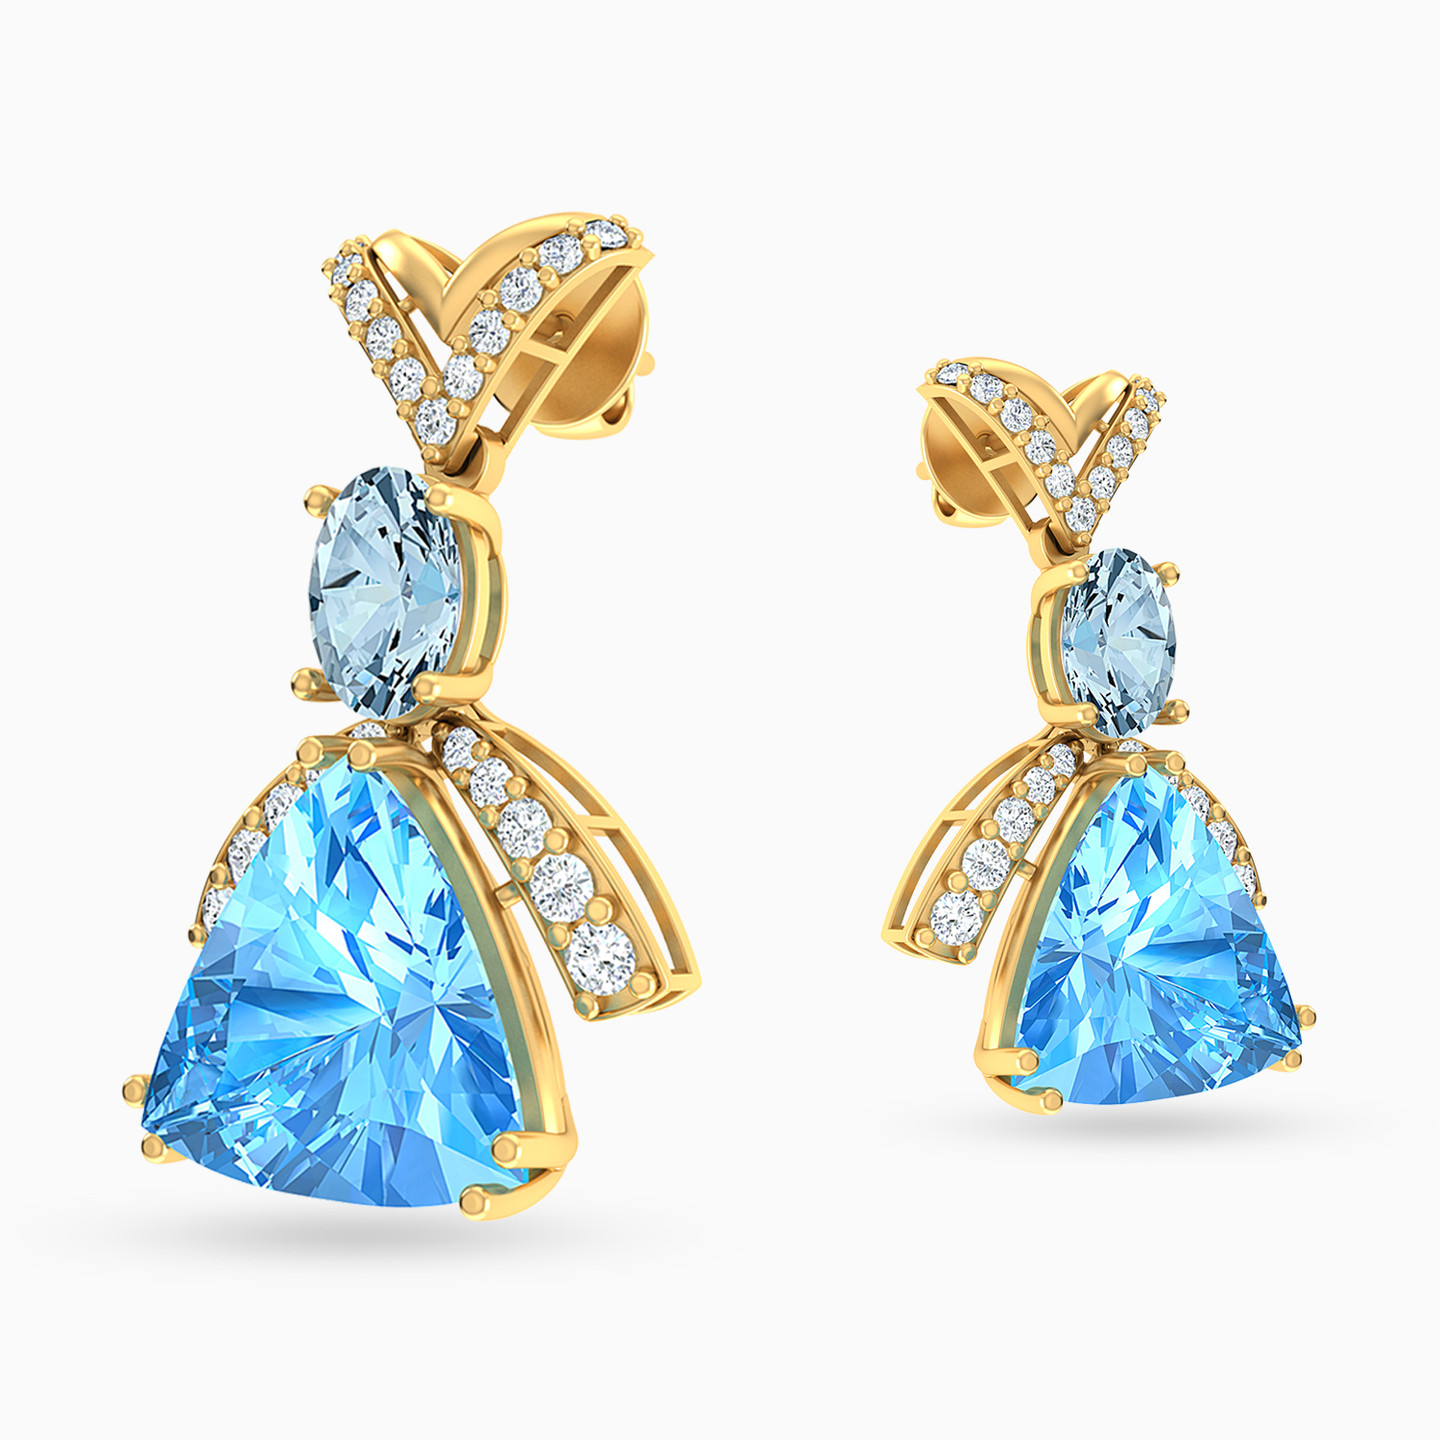 18K Gold Colored Stones Drop Earrings - 3